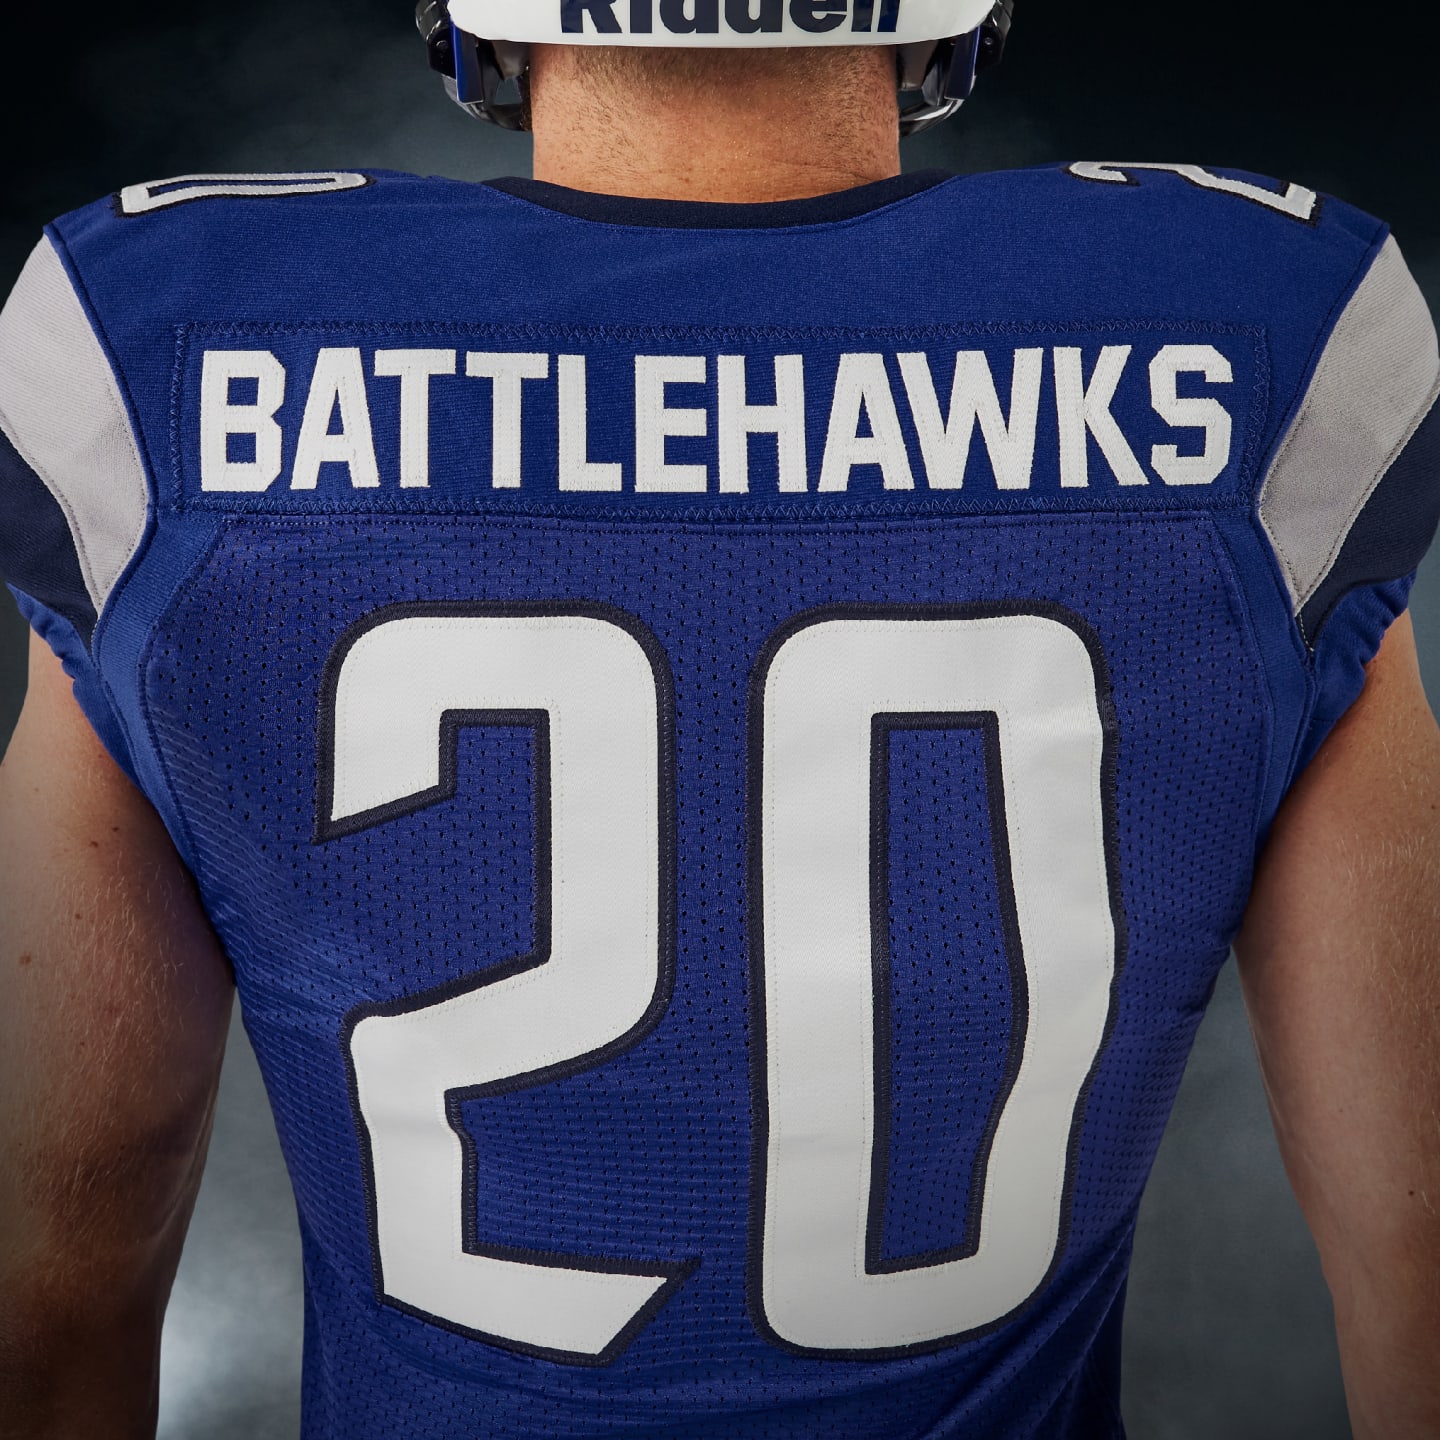 St. Louis Battlehawks unveil jerseys for upcoming XFL football season